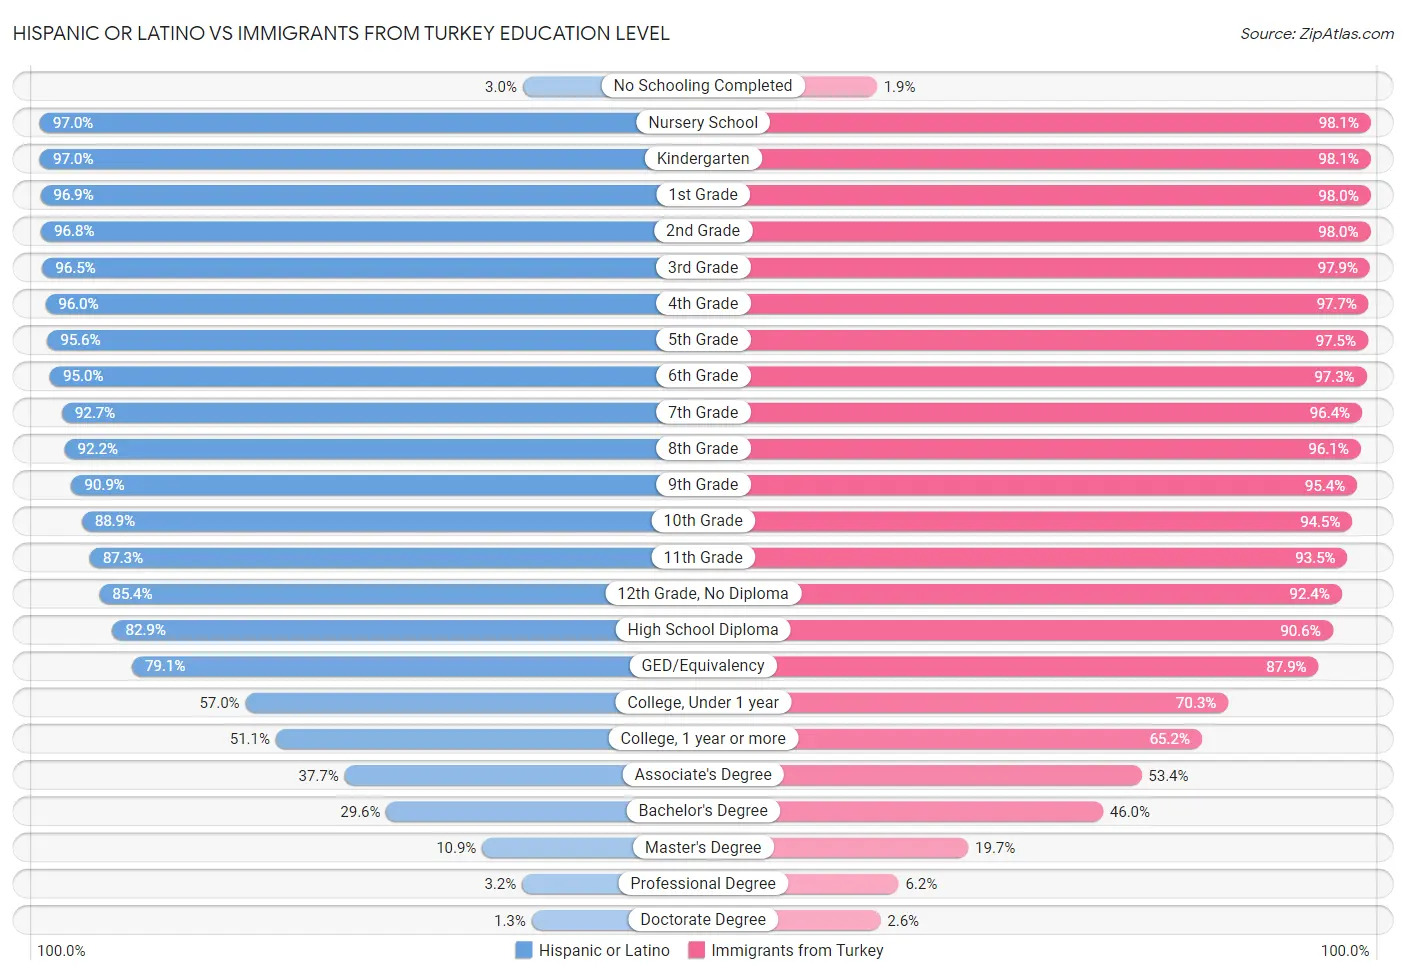 Hispanic or Latino vs Immigrants from Turkey Education Level